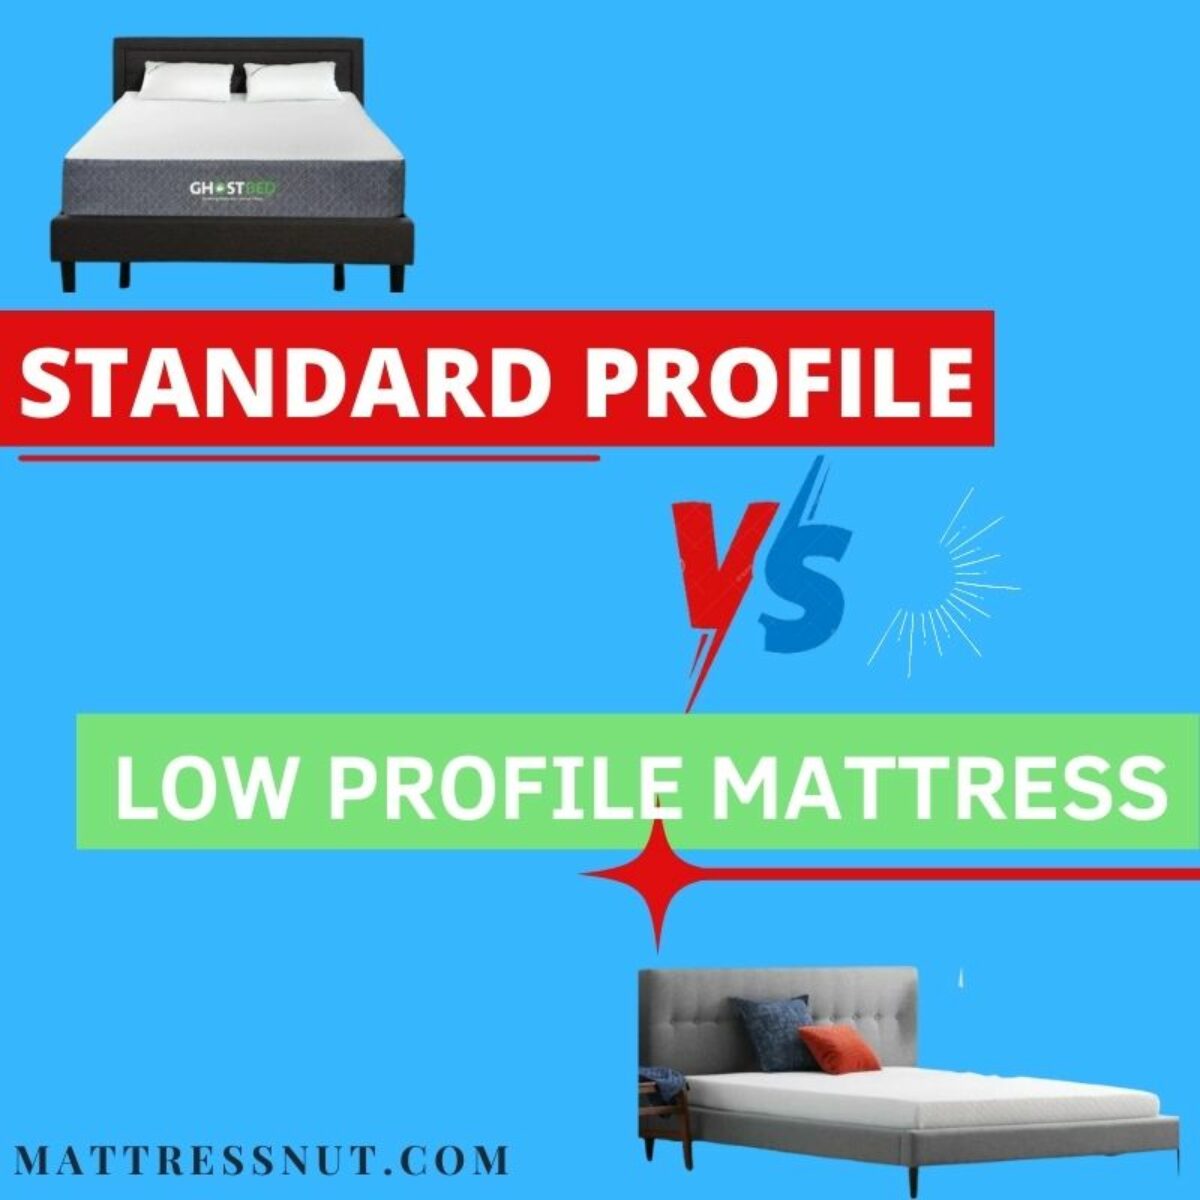 Benefits Of A Standard Profile Mattress